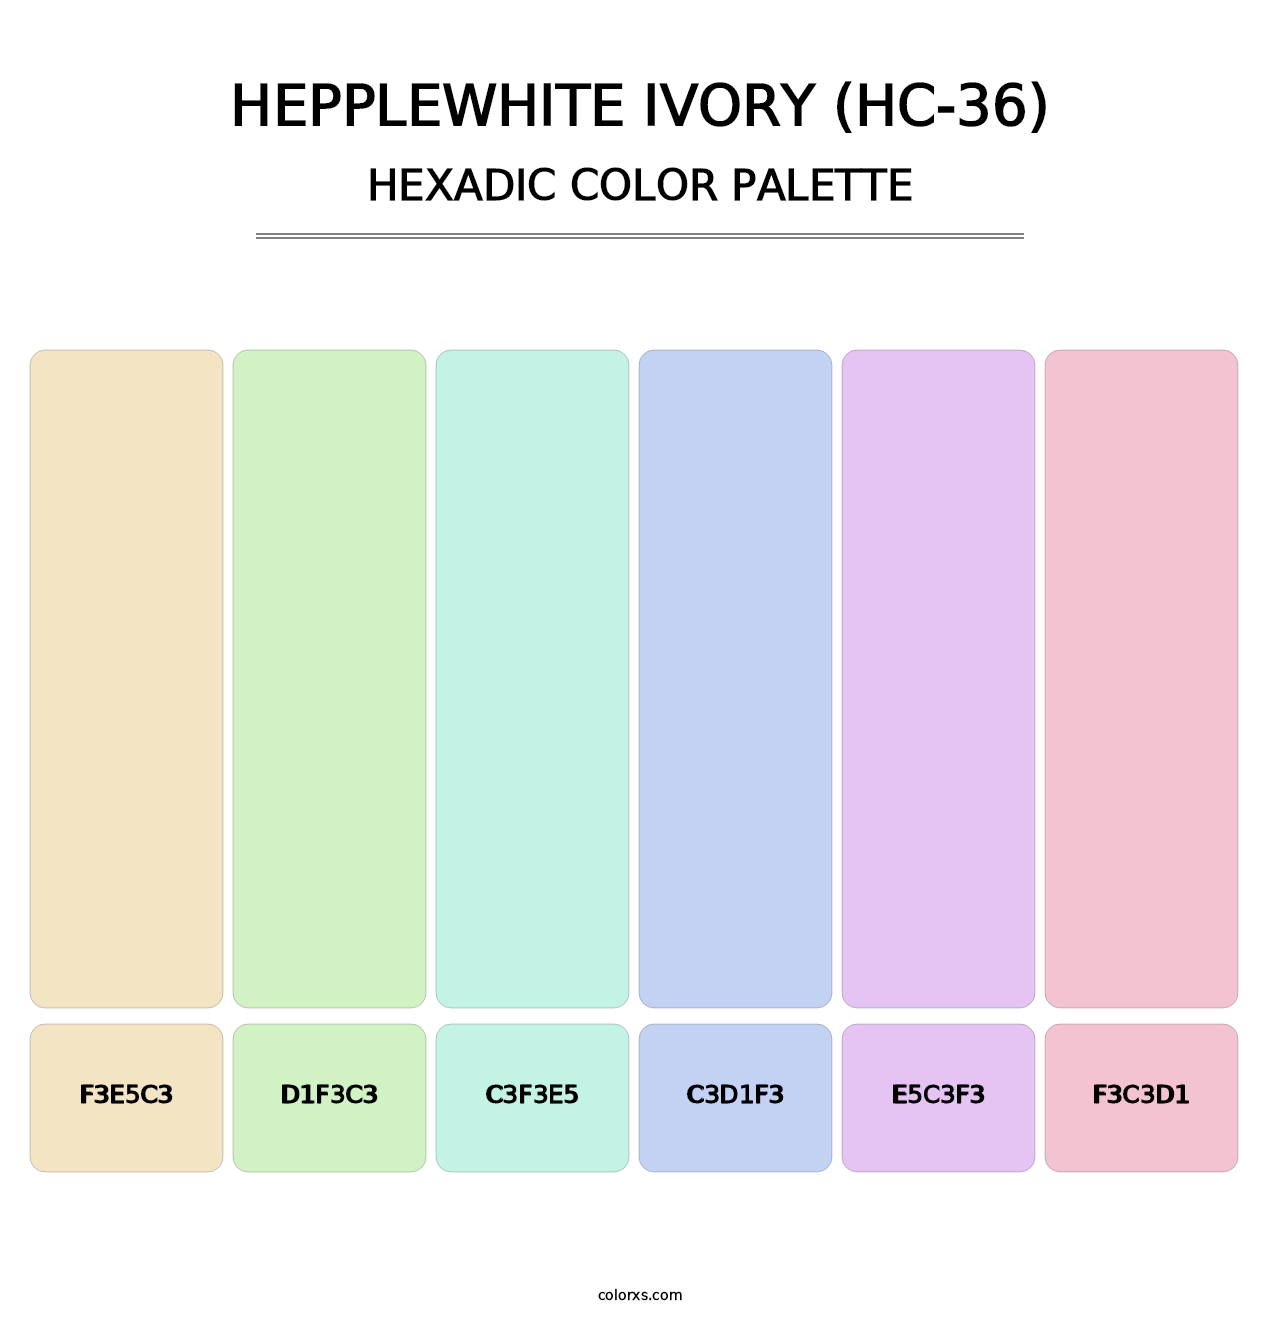 Hepplewhite Ivory (HC-36) - Hexadic Color Palette